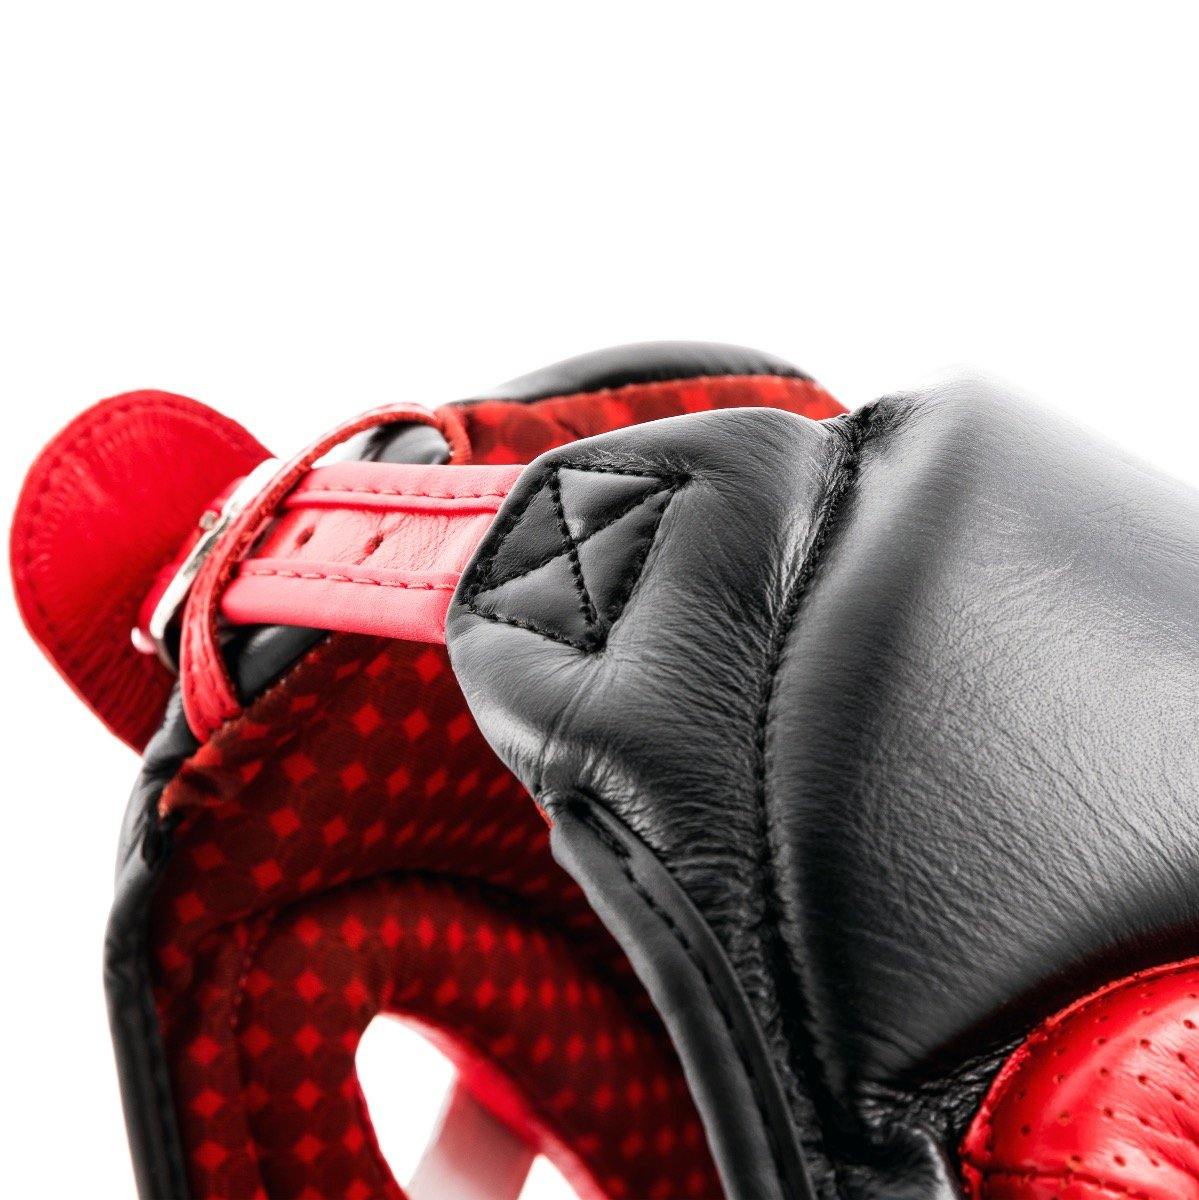 UFC Pro Training Headgear - UFC Equipment MMA and Boxing Gear Spirit Combat Sports